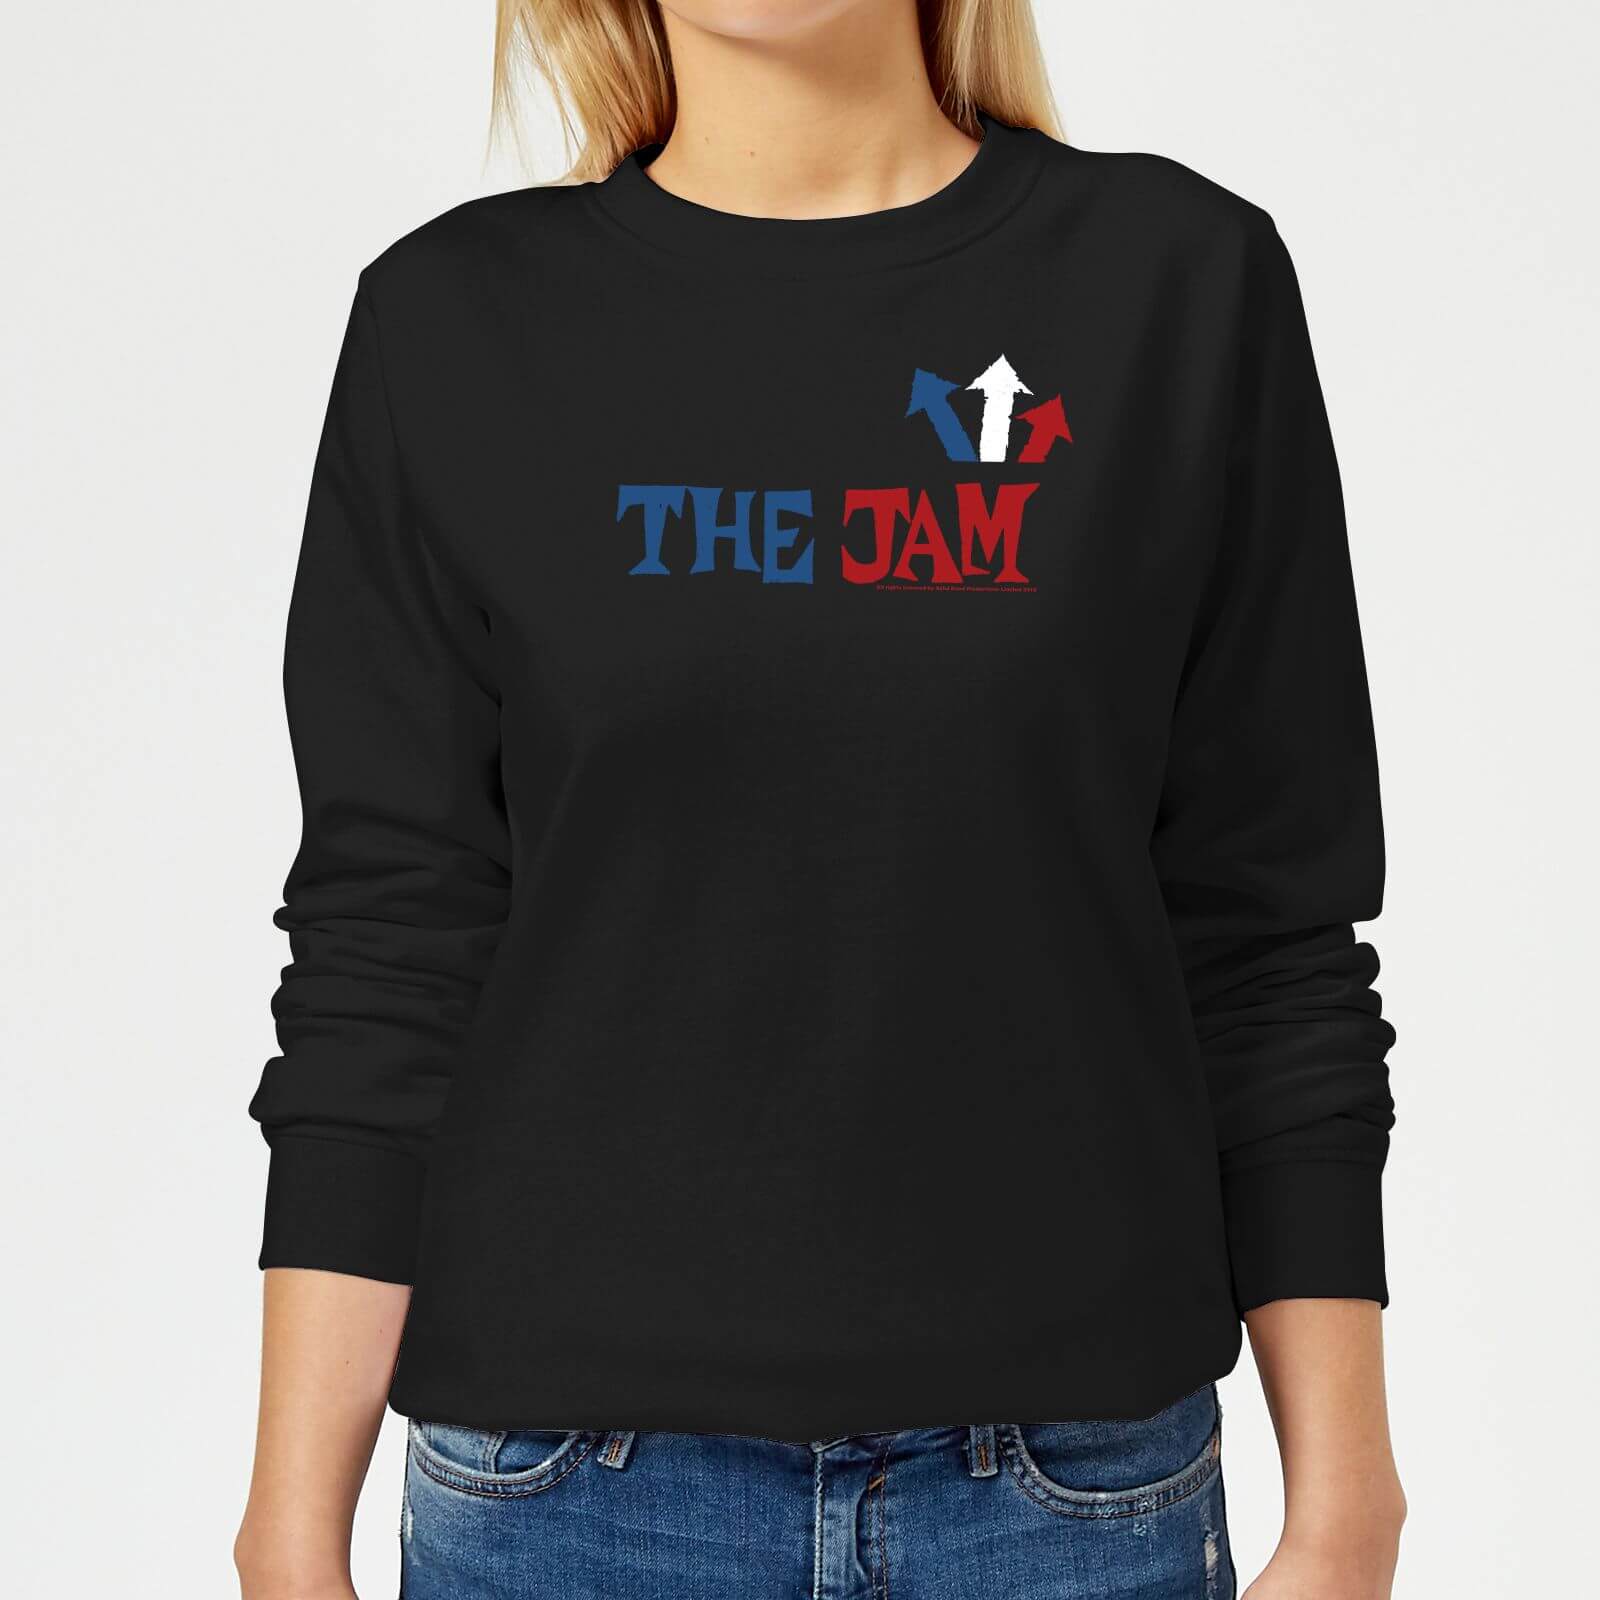 The Jam Text Logo Women's Sweatshirt - Black - S - Black